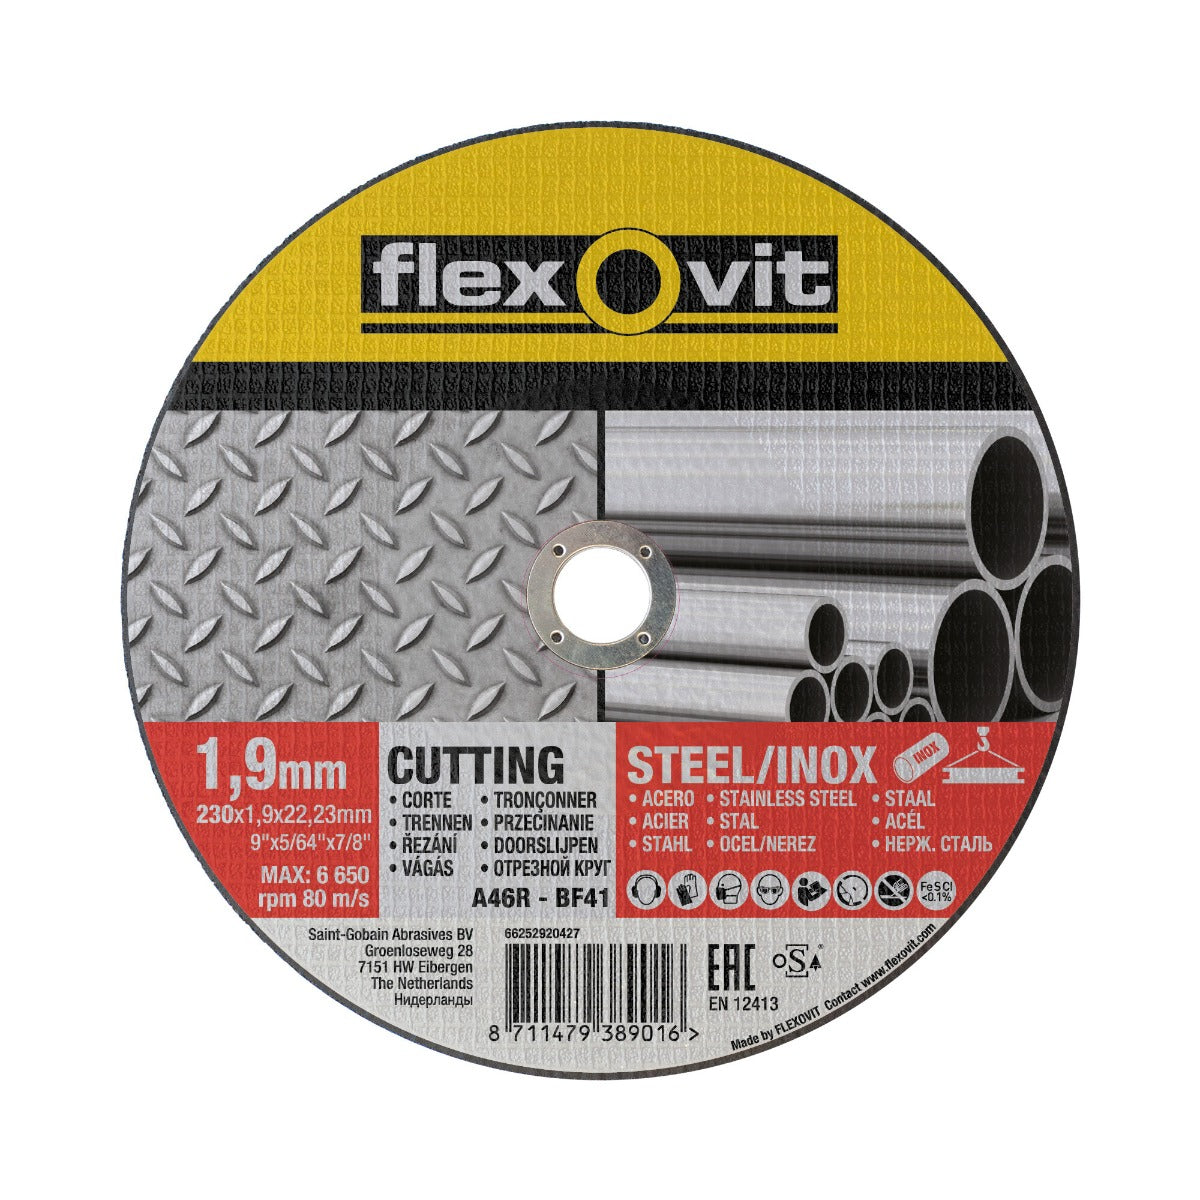 FlexOvit Pro Thin Cut Metal Steels and Stainless Steels 230mm x 1.9mm x 22.23mm